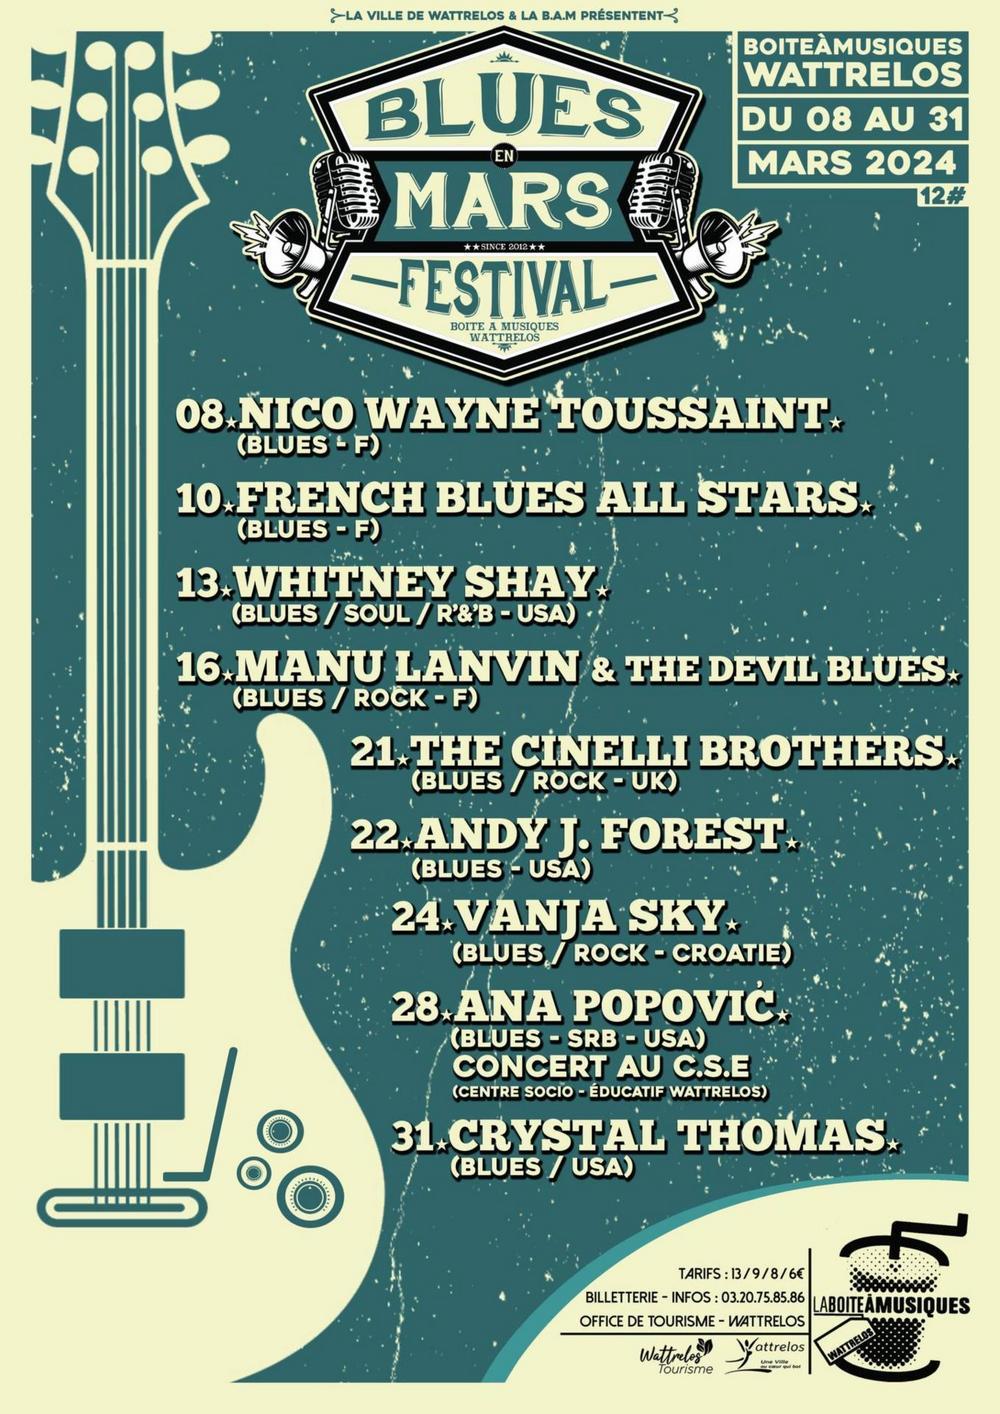 Blues Mars Festival 2025 Wattrelos, dates et programme du festival